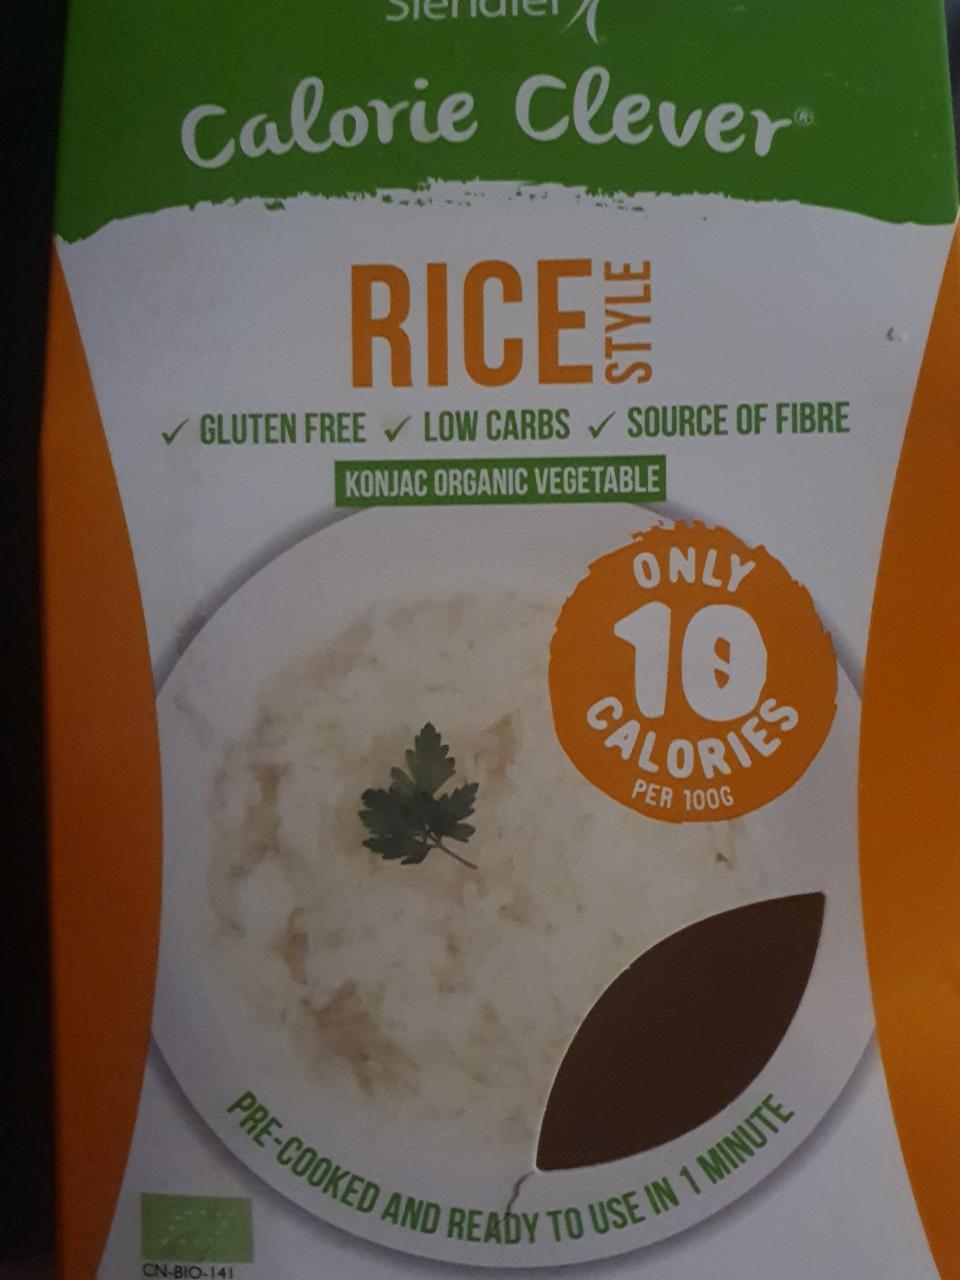 Fotografie - slendier rice